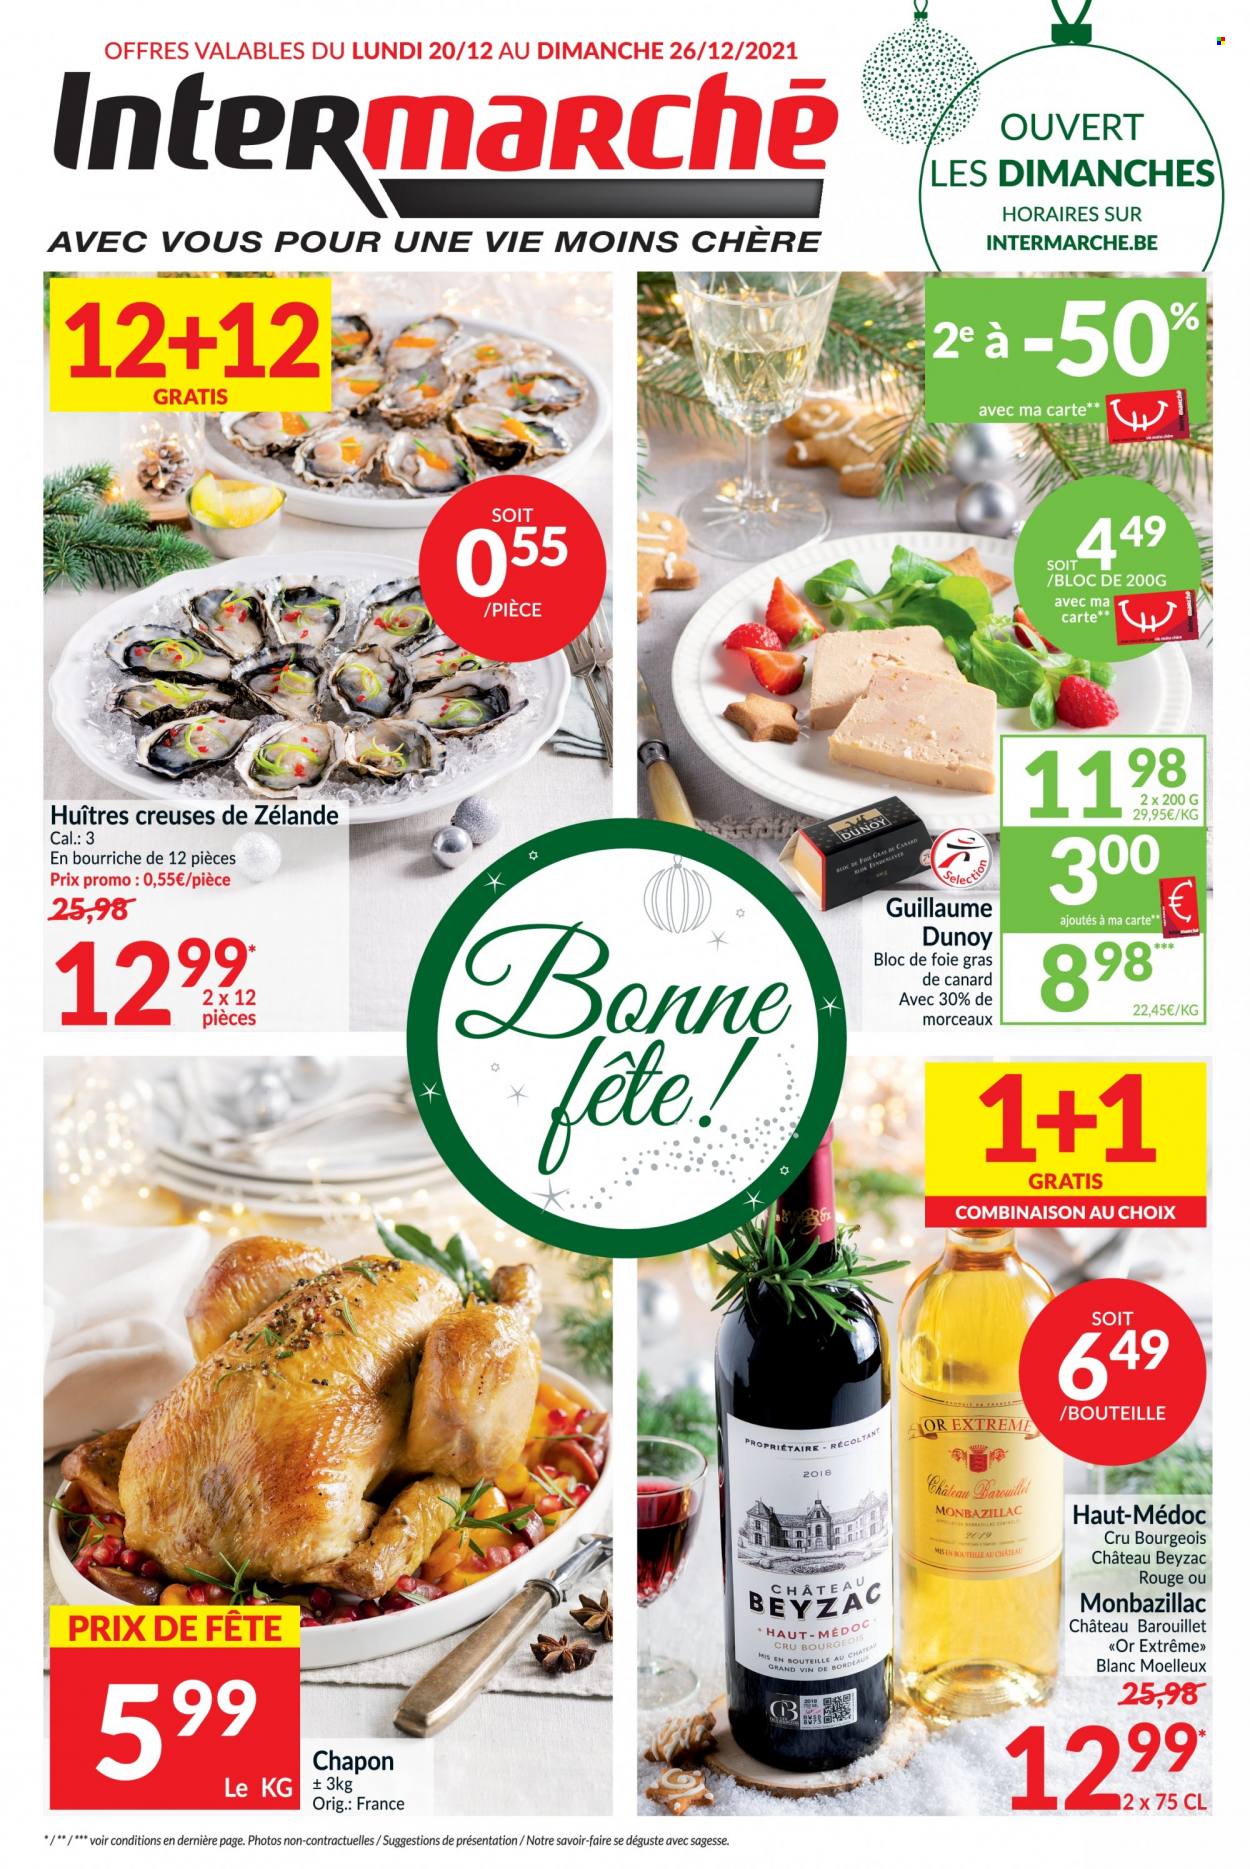 thumbnail - Intermarché-aanbieding - 20/12/2021 - 26/12/2021 -  producten in de aanbieding - foie gras, foie gras de canard. Pagina 1.